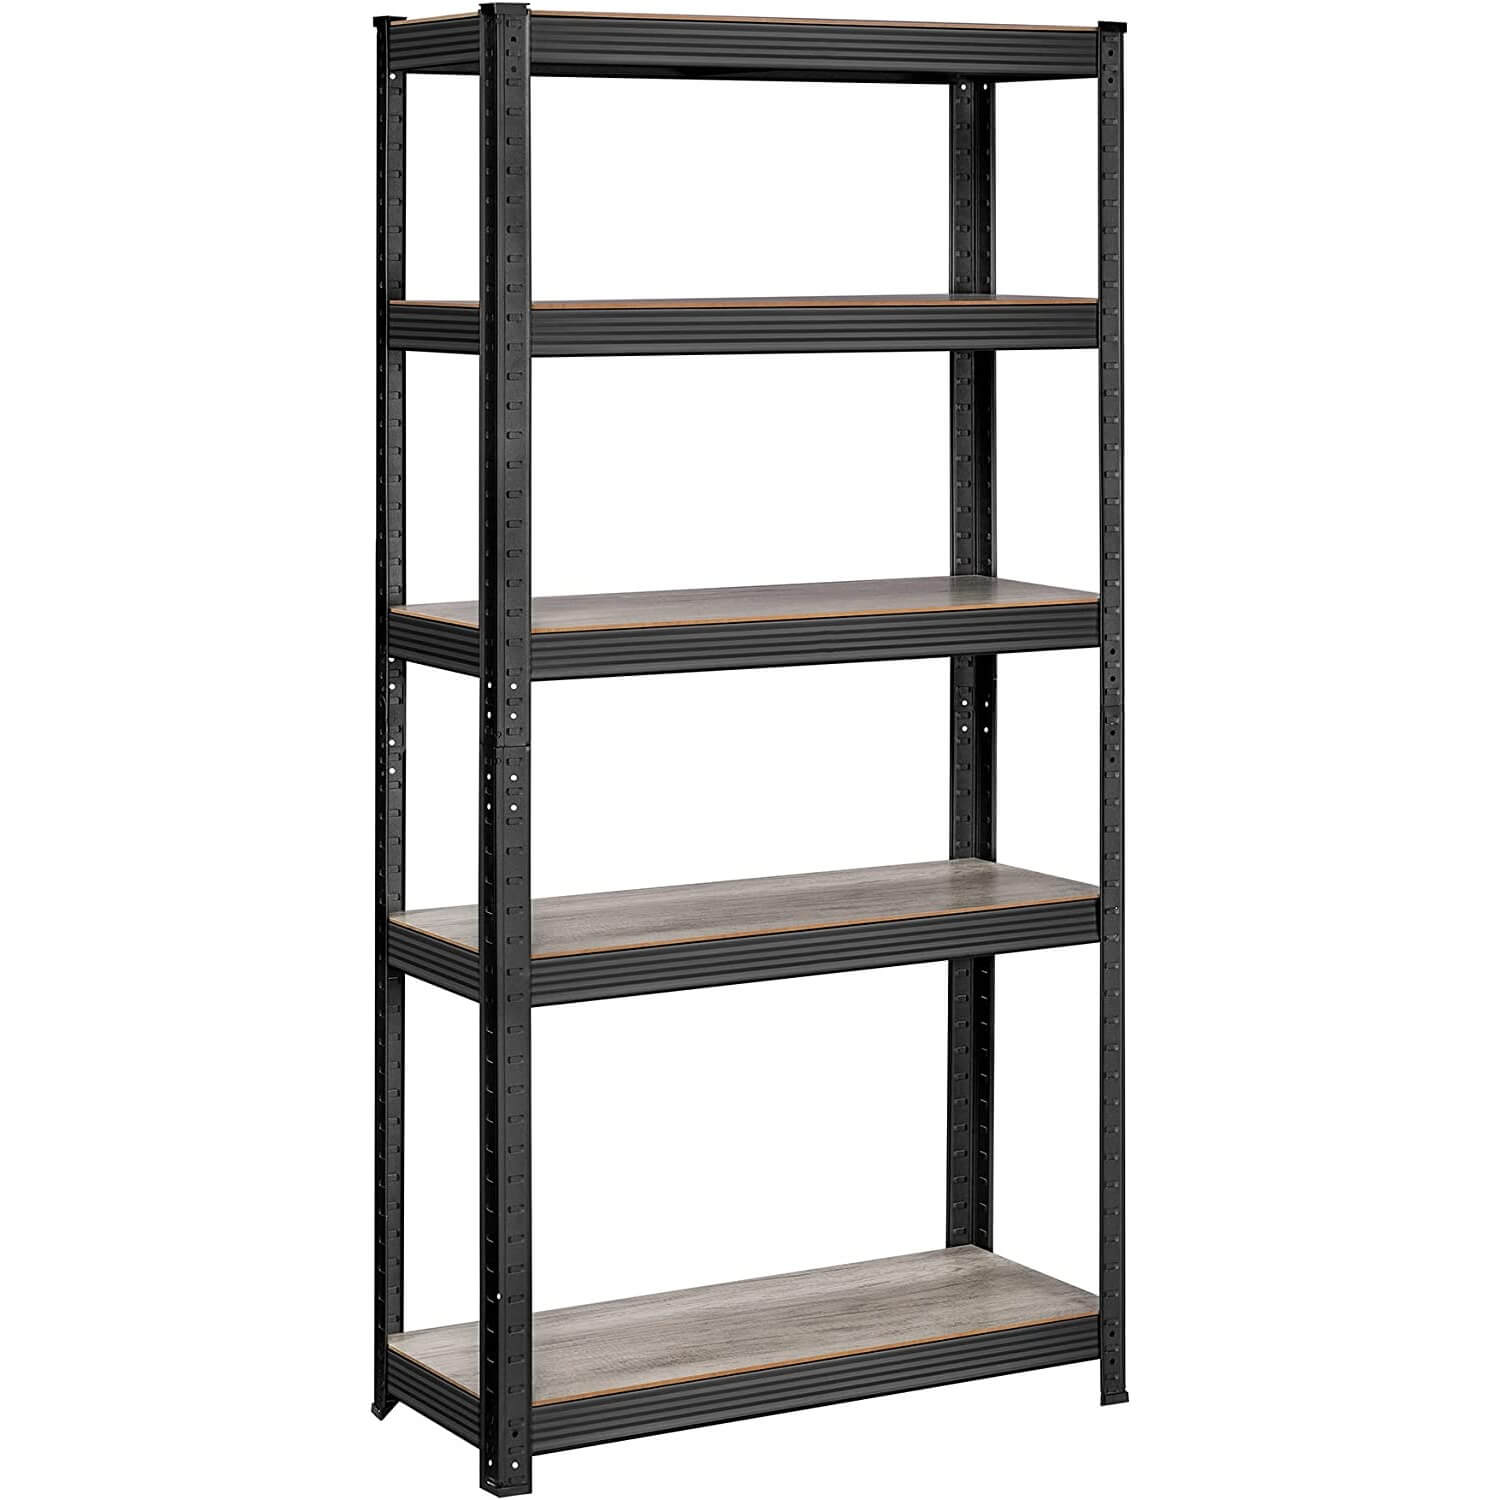 heavy duty book/kitchen shelf songmics 30 x 75 x 150 cm 5 shelves grey/black glr030b11